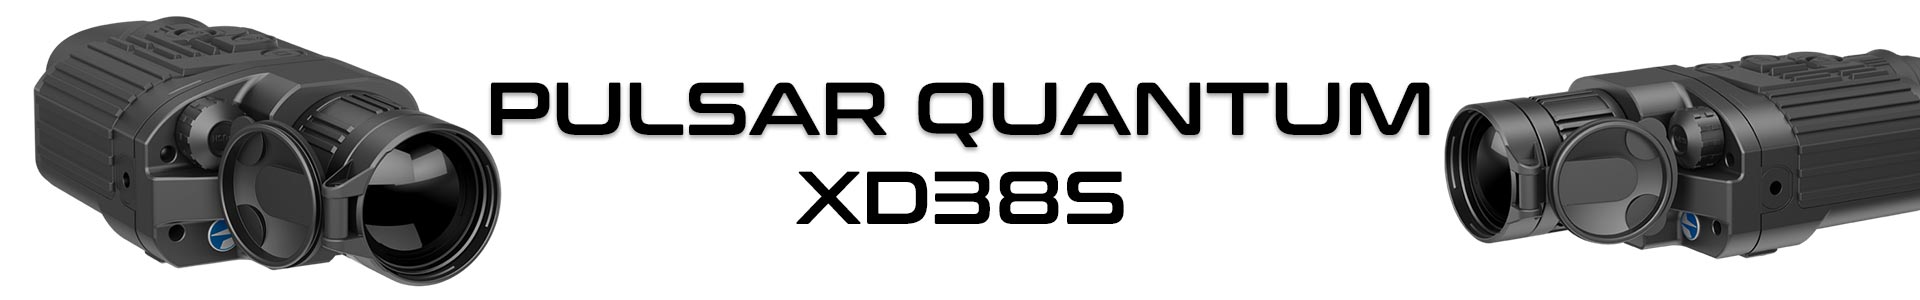 Купить пульсар Quantum XD38S